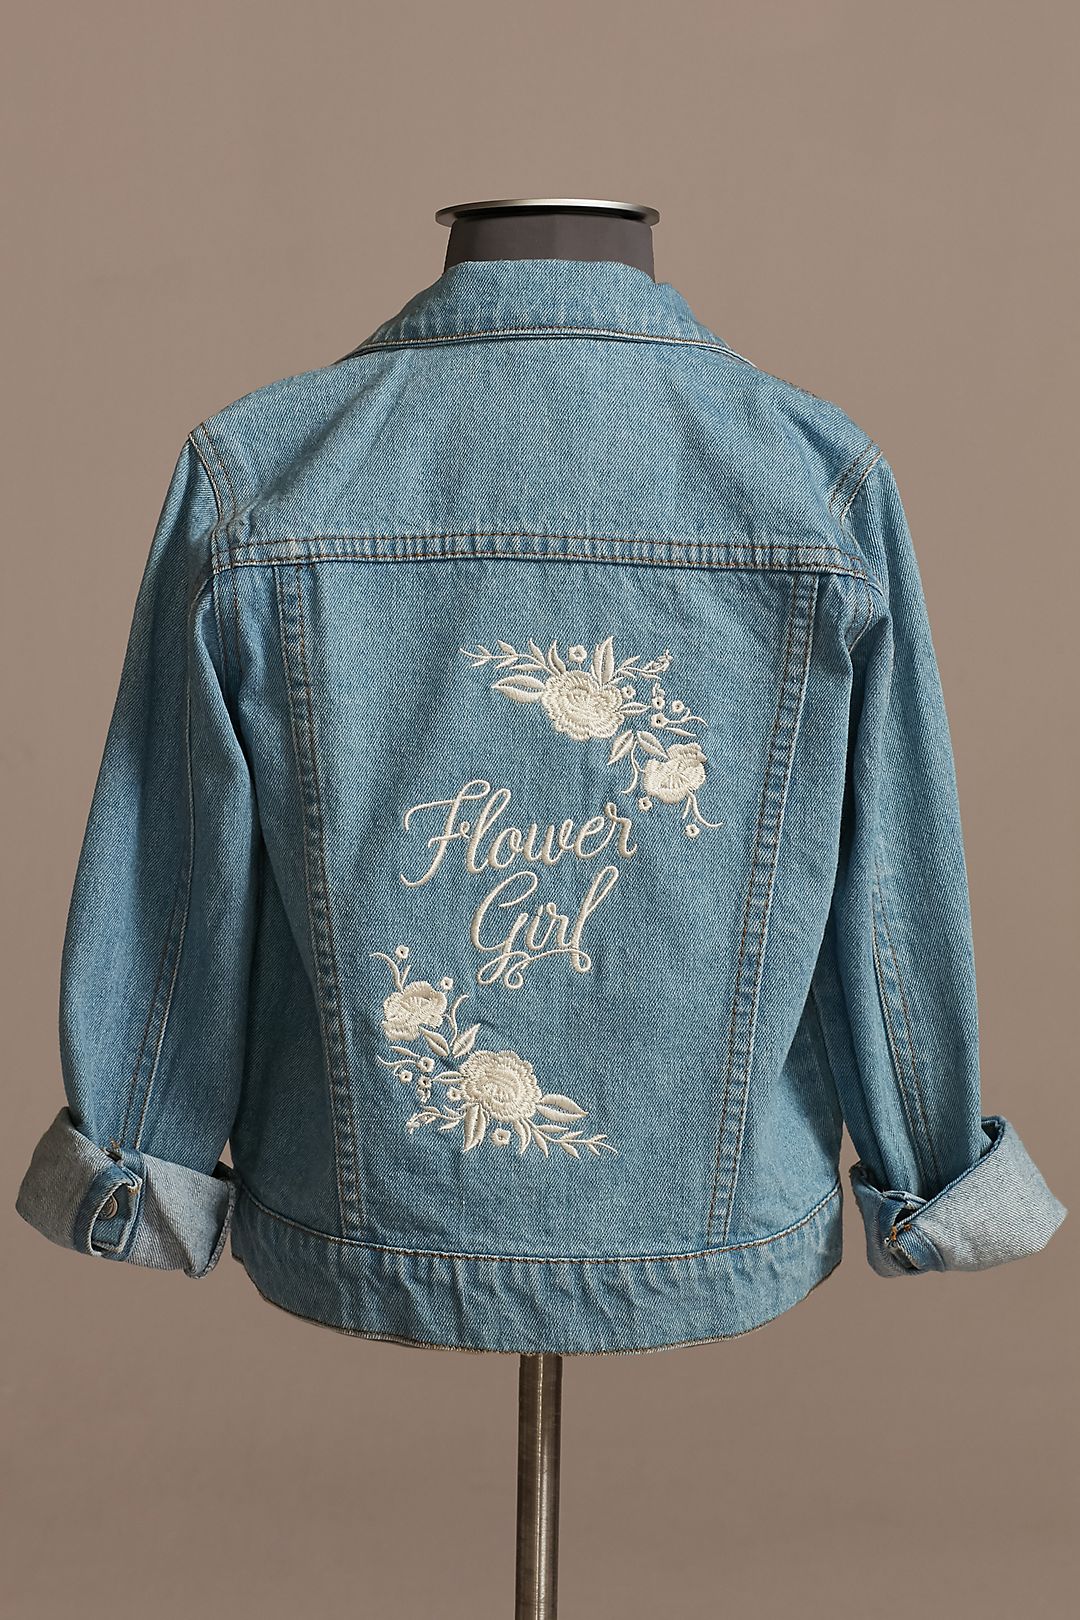 Embroidered Flower Girl Jean Jacket David's